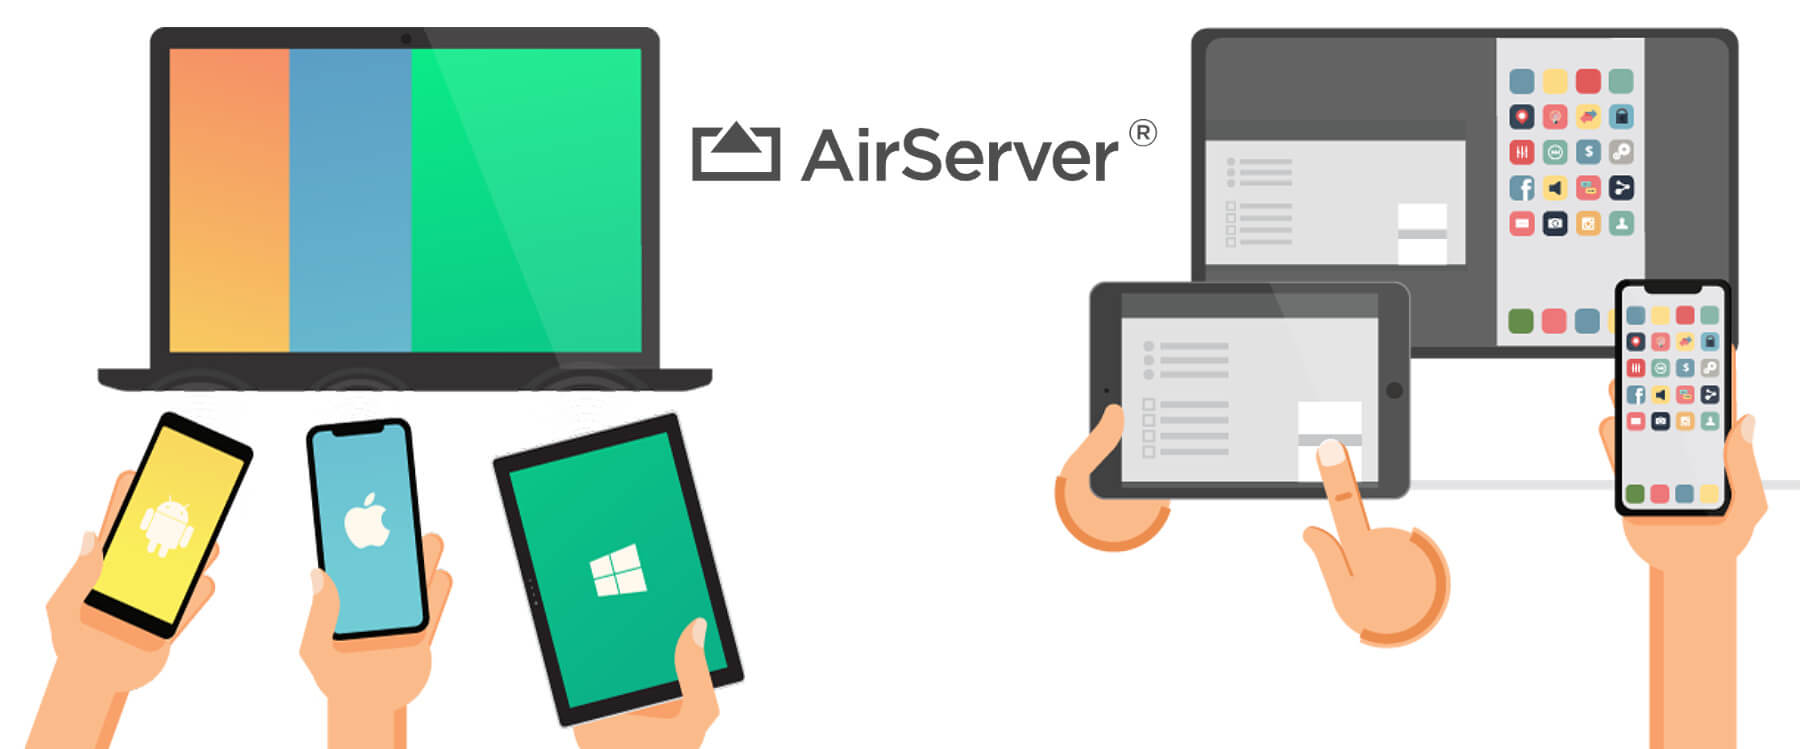 airserver app